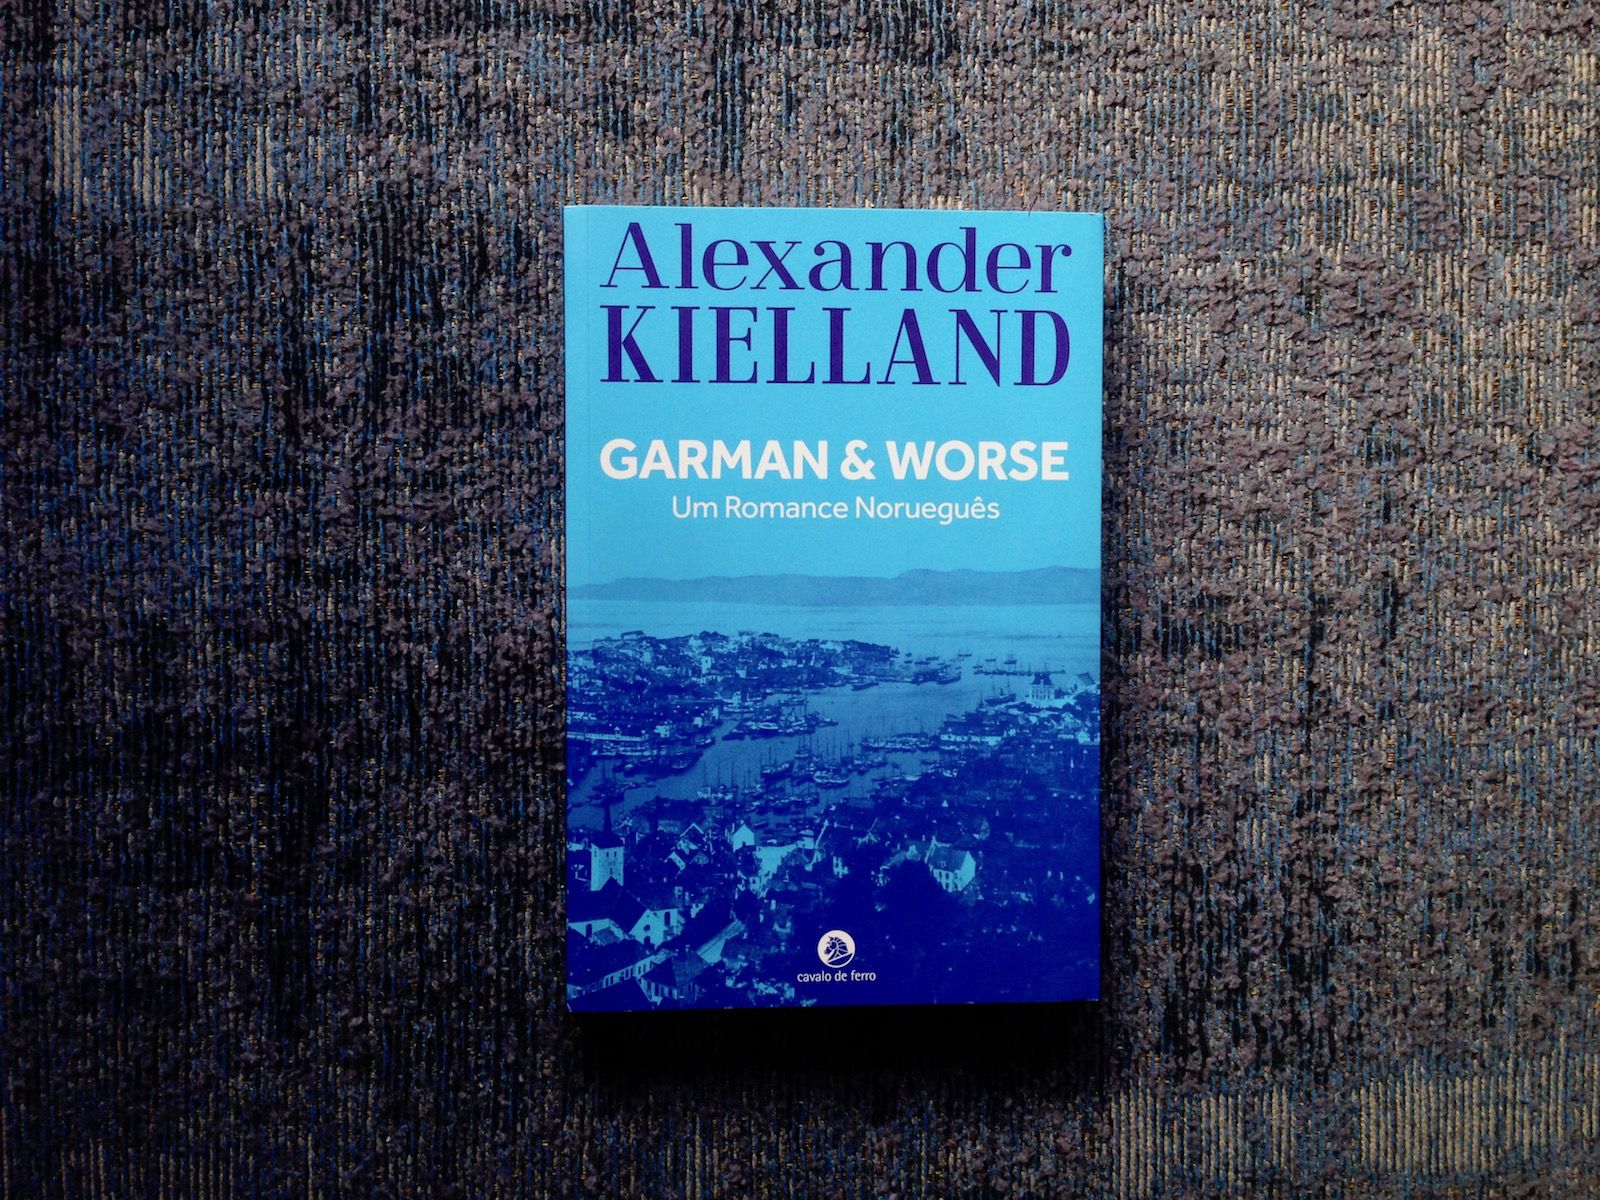 A vida de uma pequena cidade norueguesa, em ‘Garman & Worse’, de Alexander Kielland